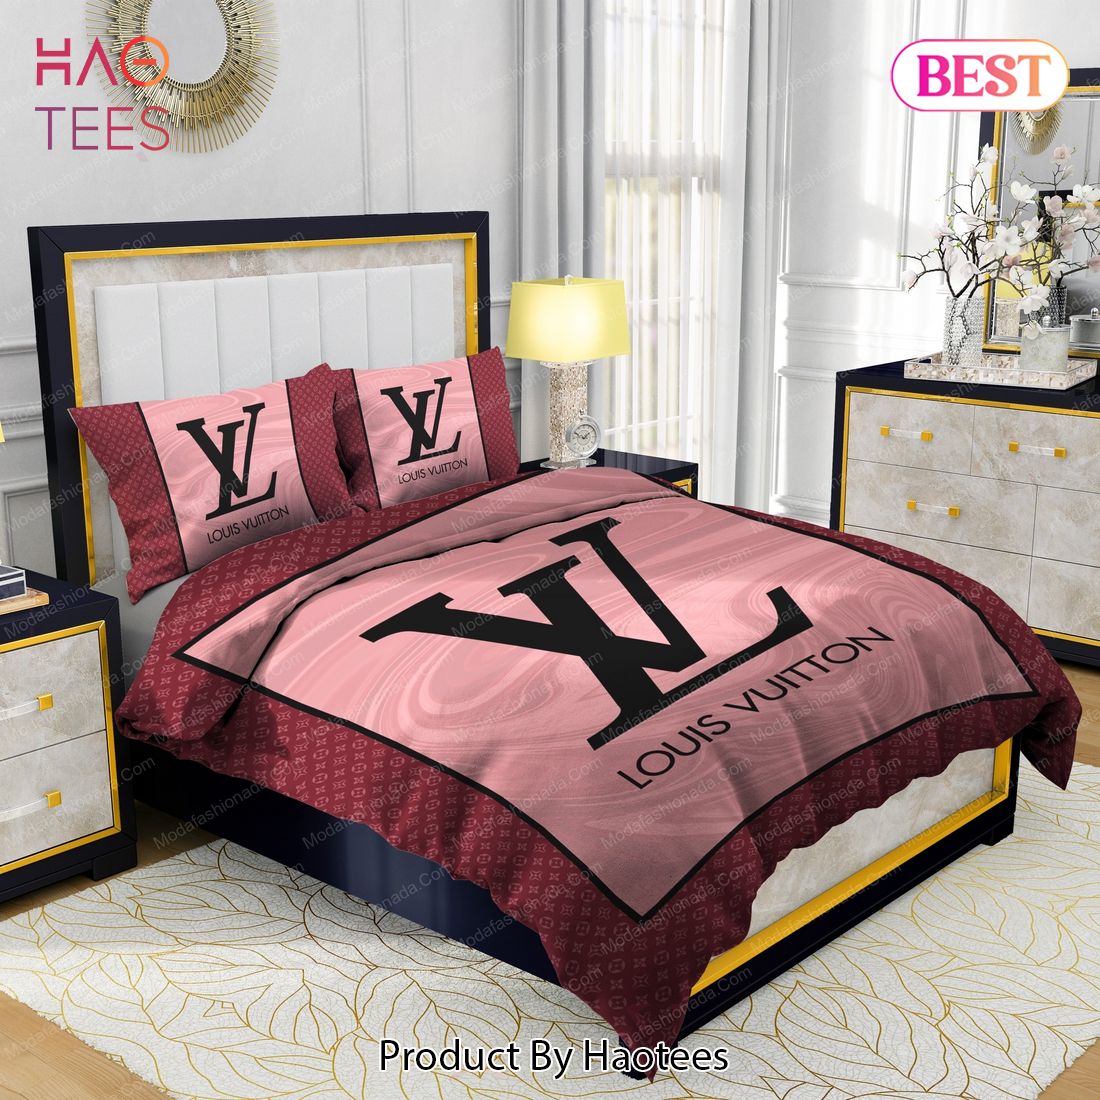 Louis Vuitton Basic Pink Bedding Set Queen - REVER LAVIE